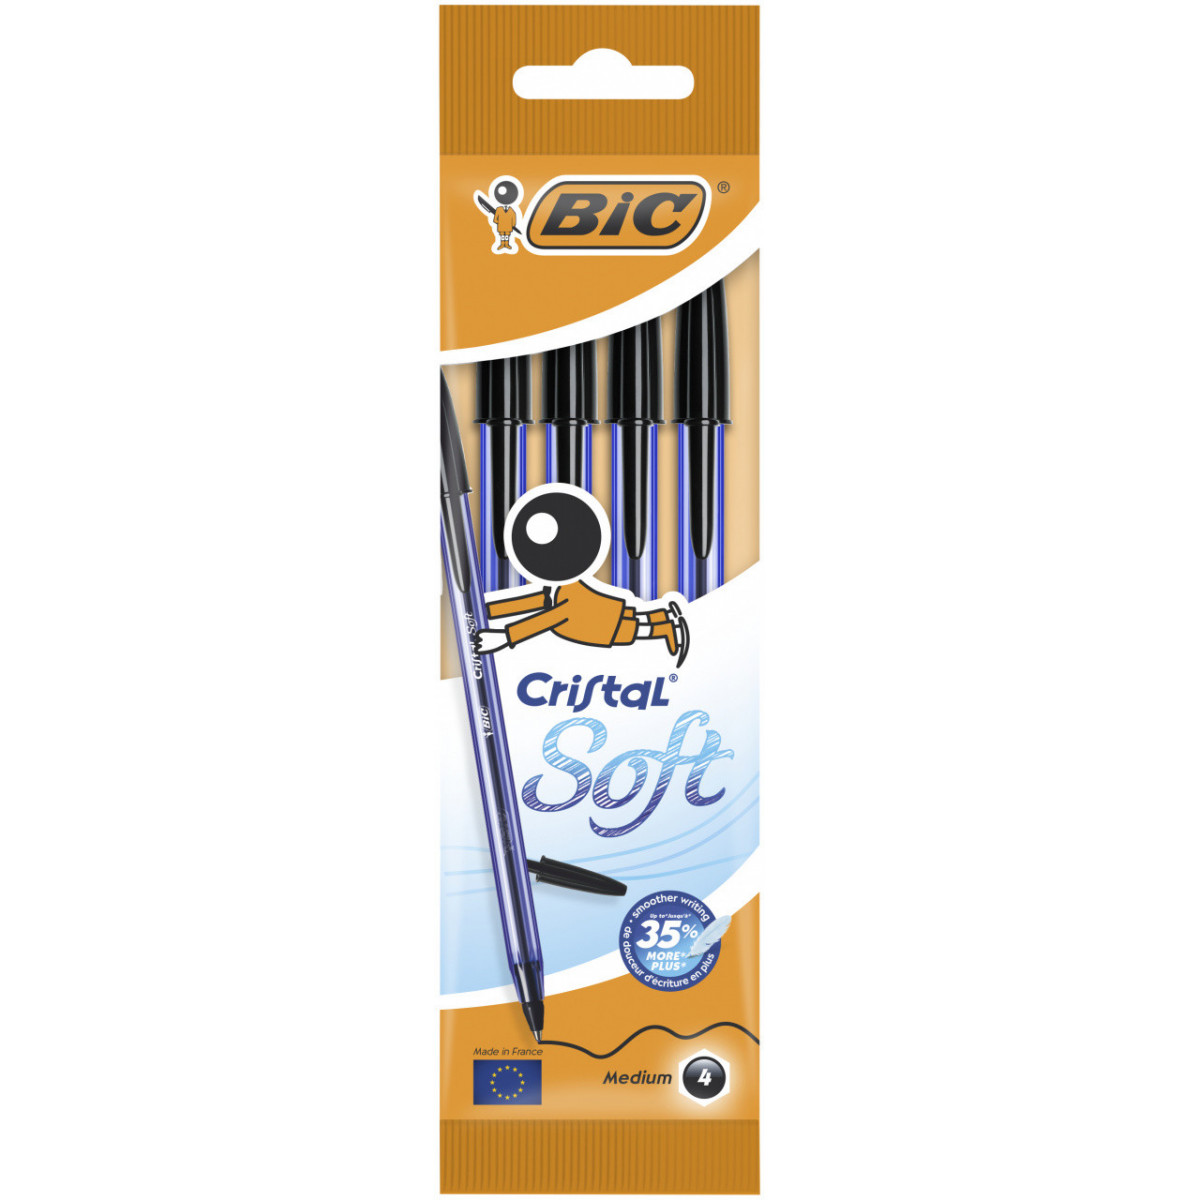 BIC Cristal Soft, Penne Nere a Sfera (Punta Media 1.2mm), Confezione da 4